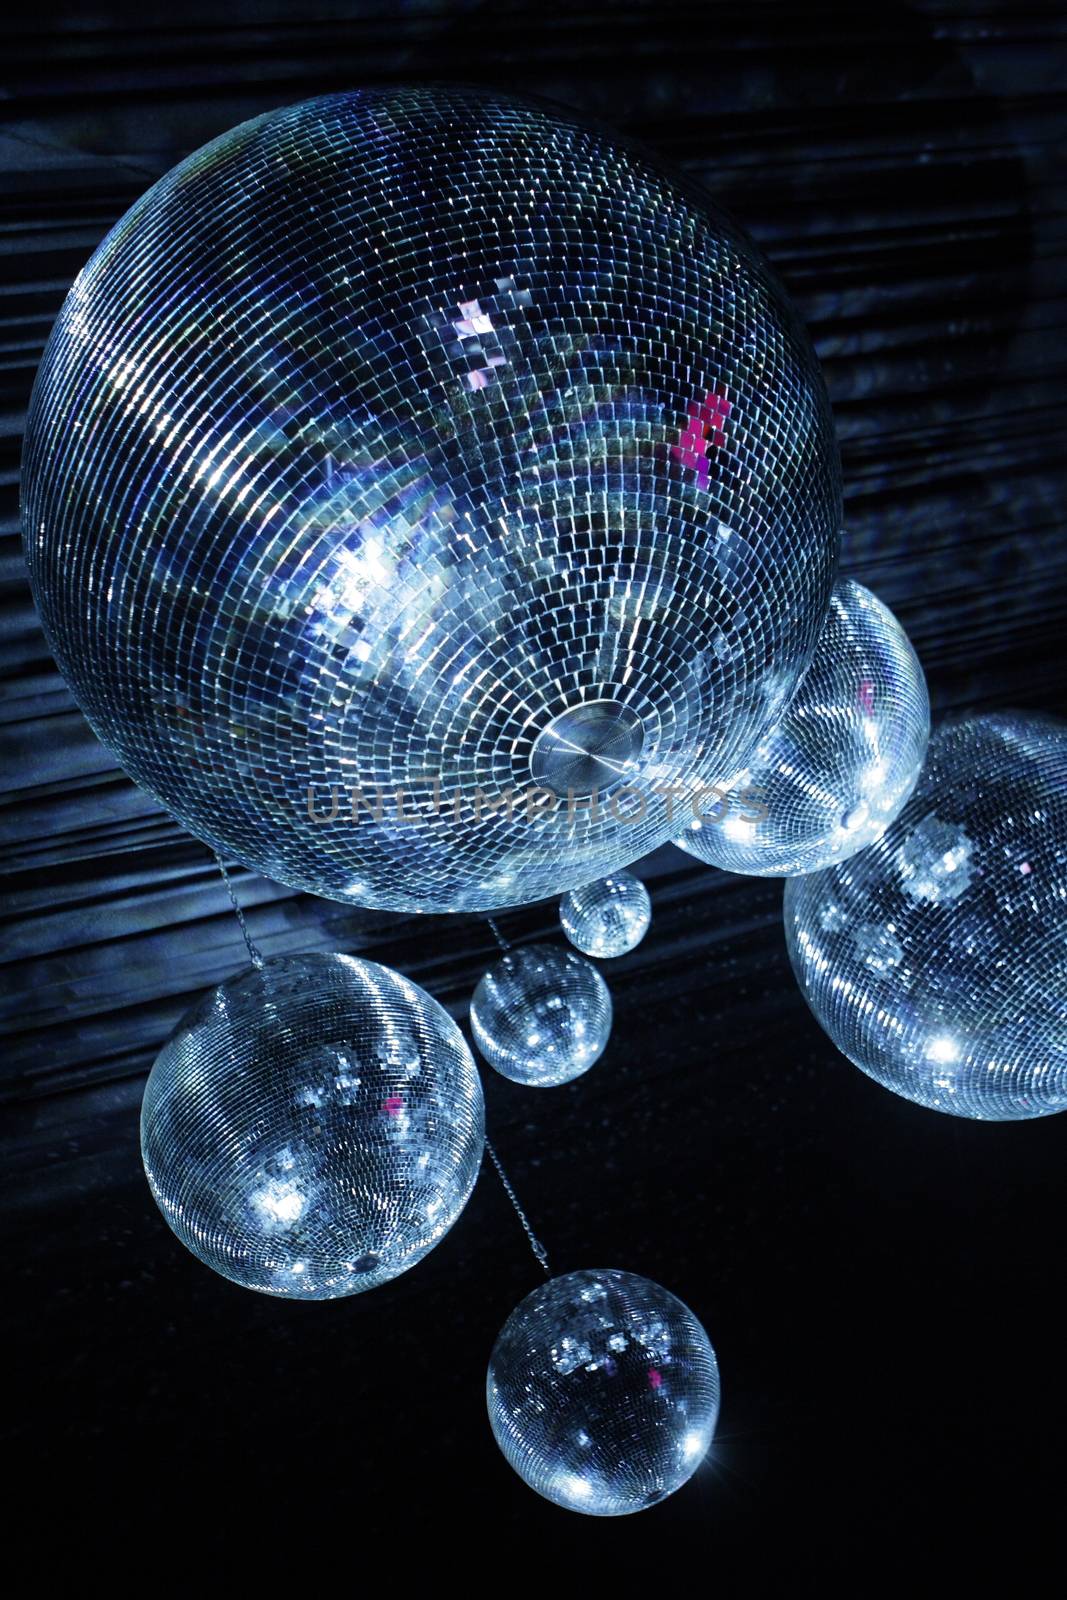 Shiny disco balls on a dark background